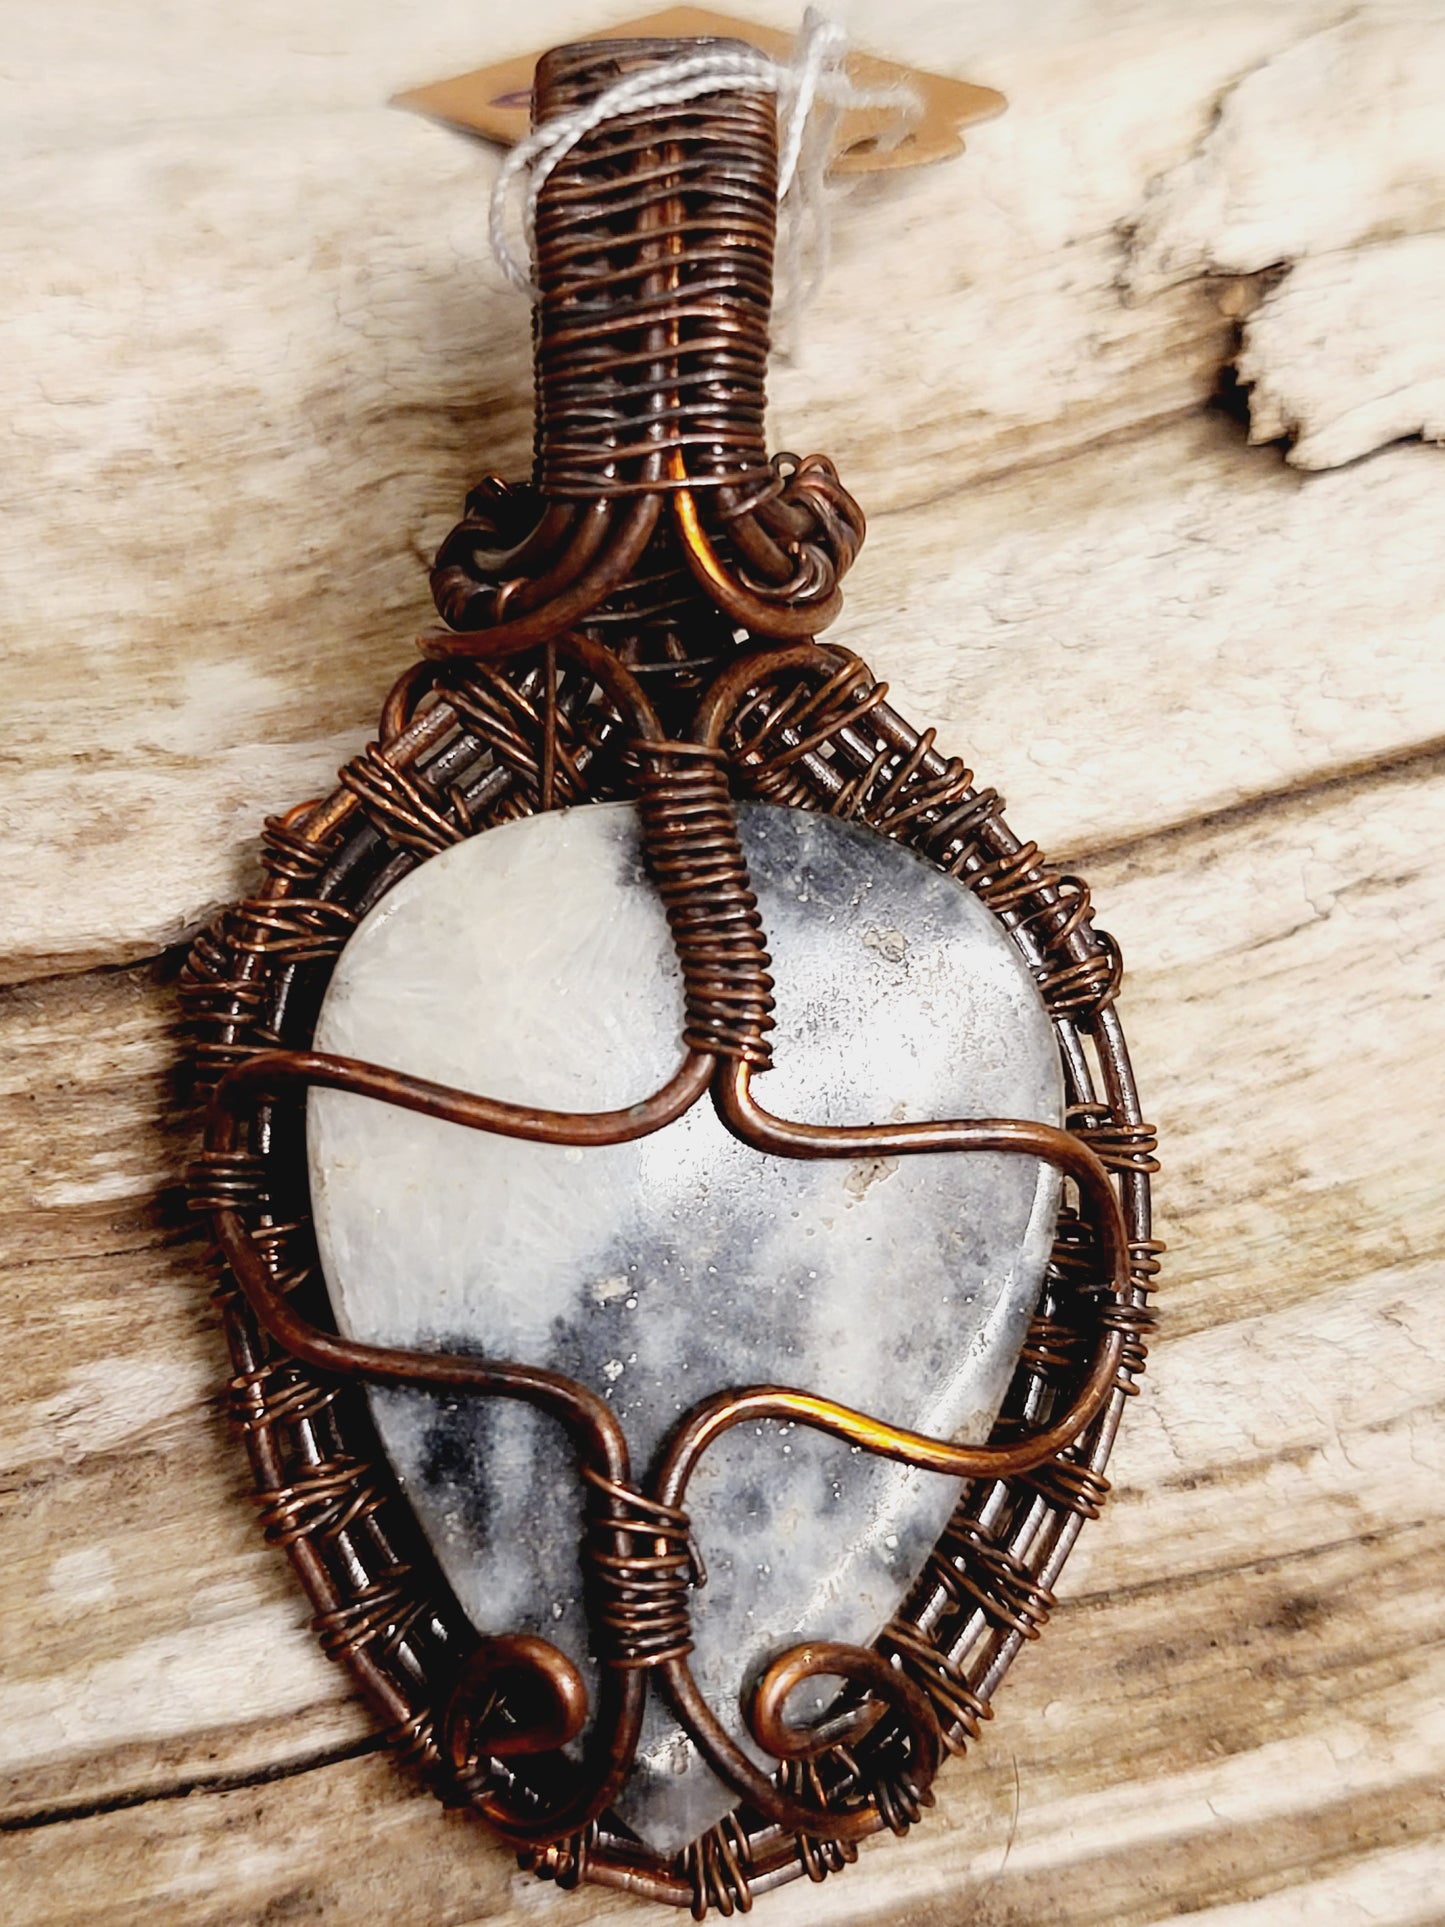 Jasper Oxidized Copper Wire Wrapped Necklace Pendant